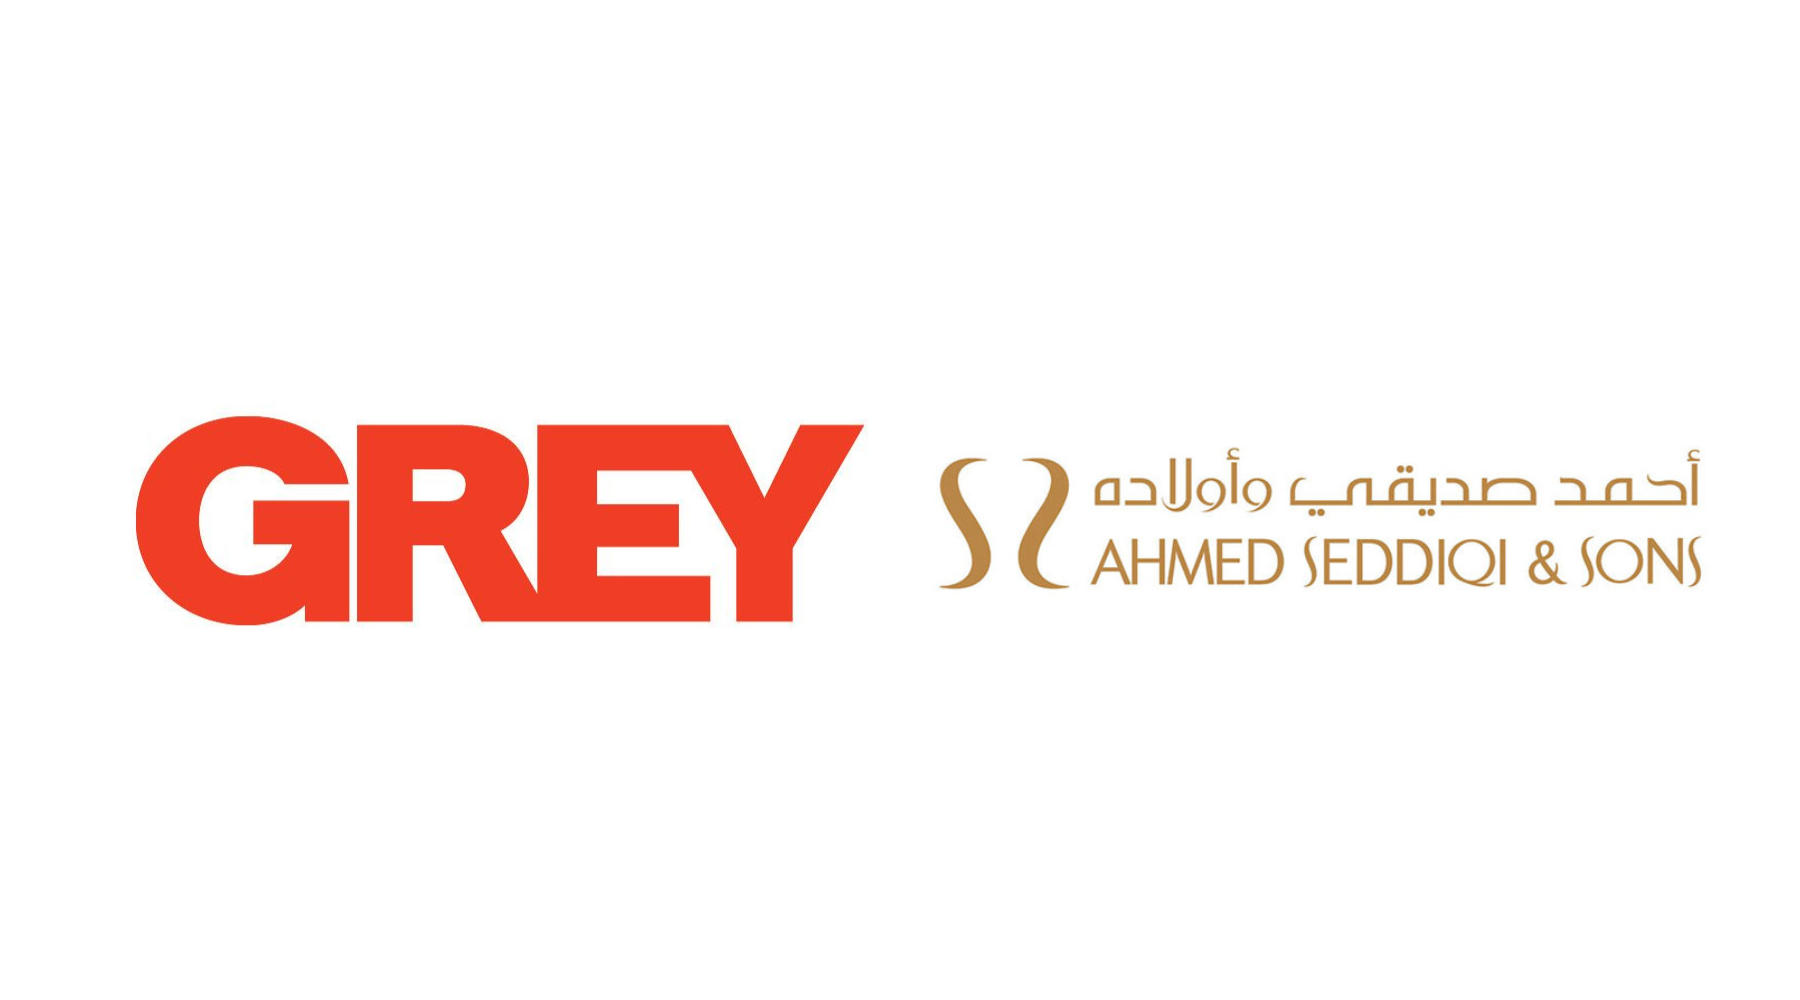 Grey Chosen as Creative Agency for Ahmed Seddiqi & Sons and Seddiqi Holdings